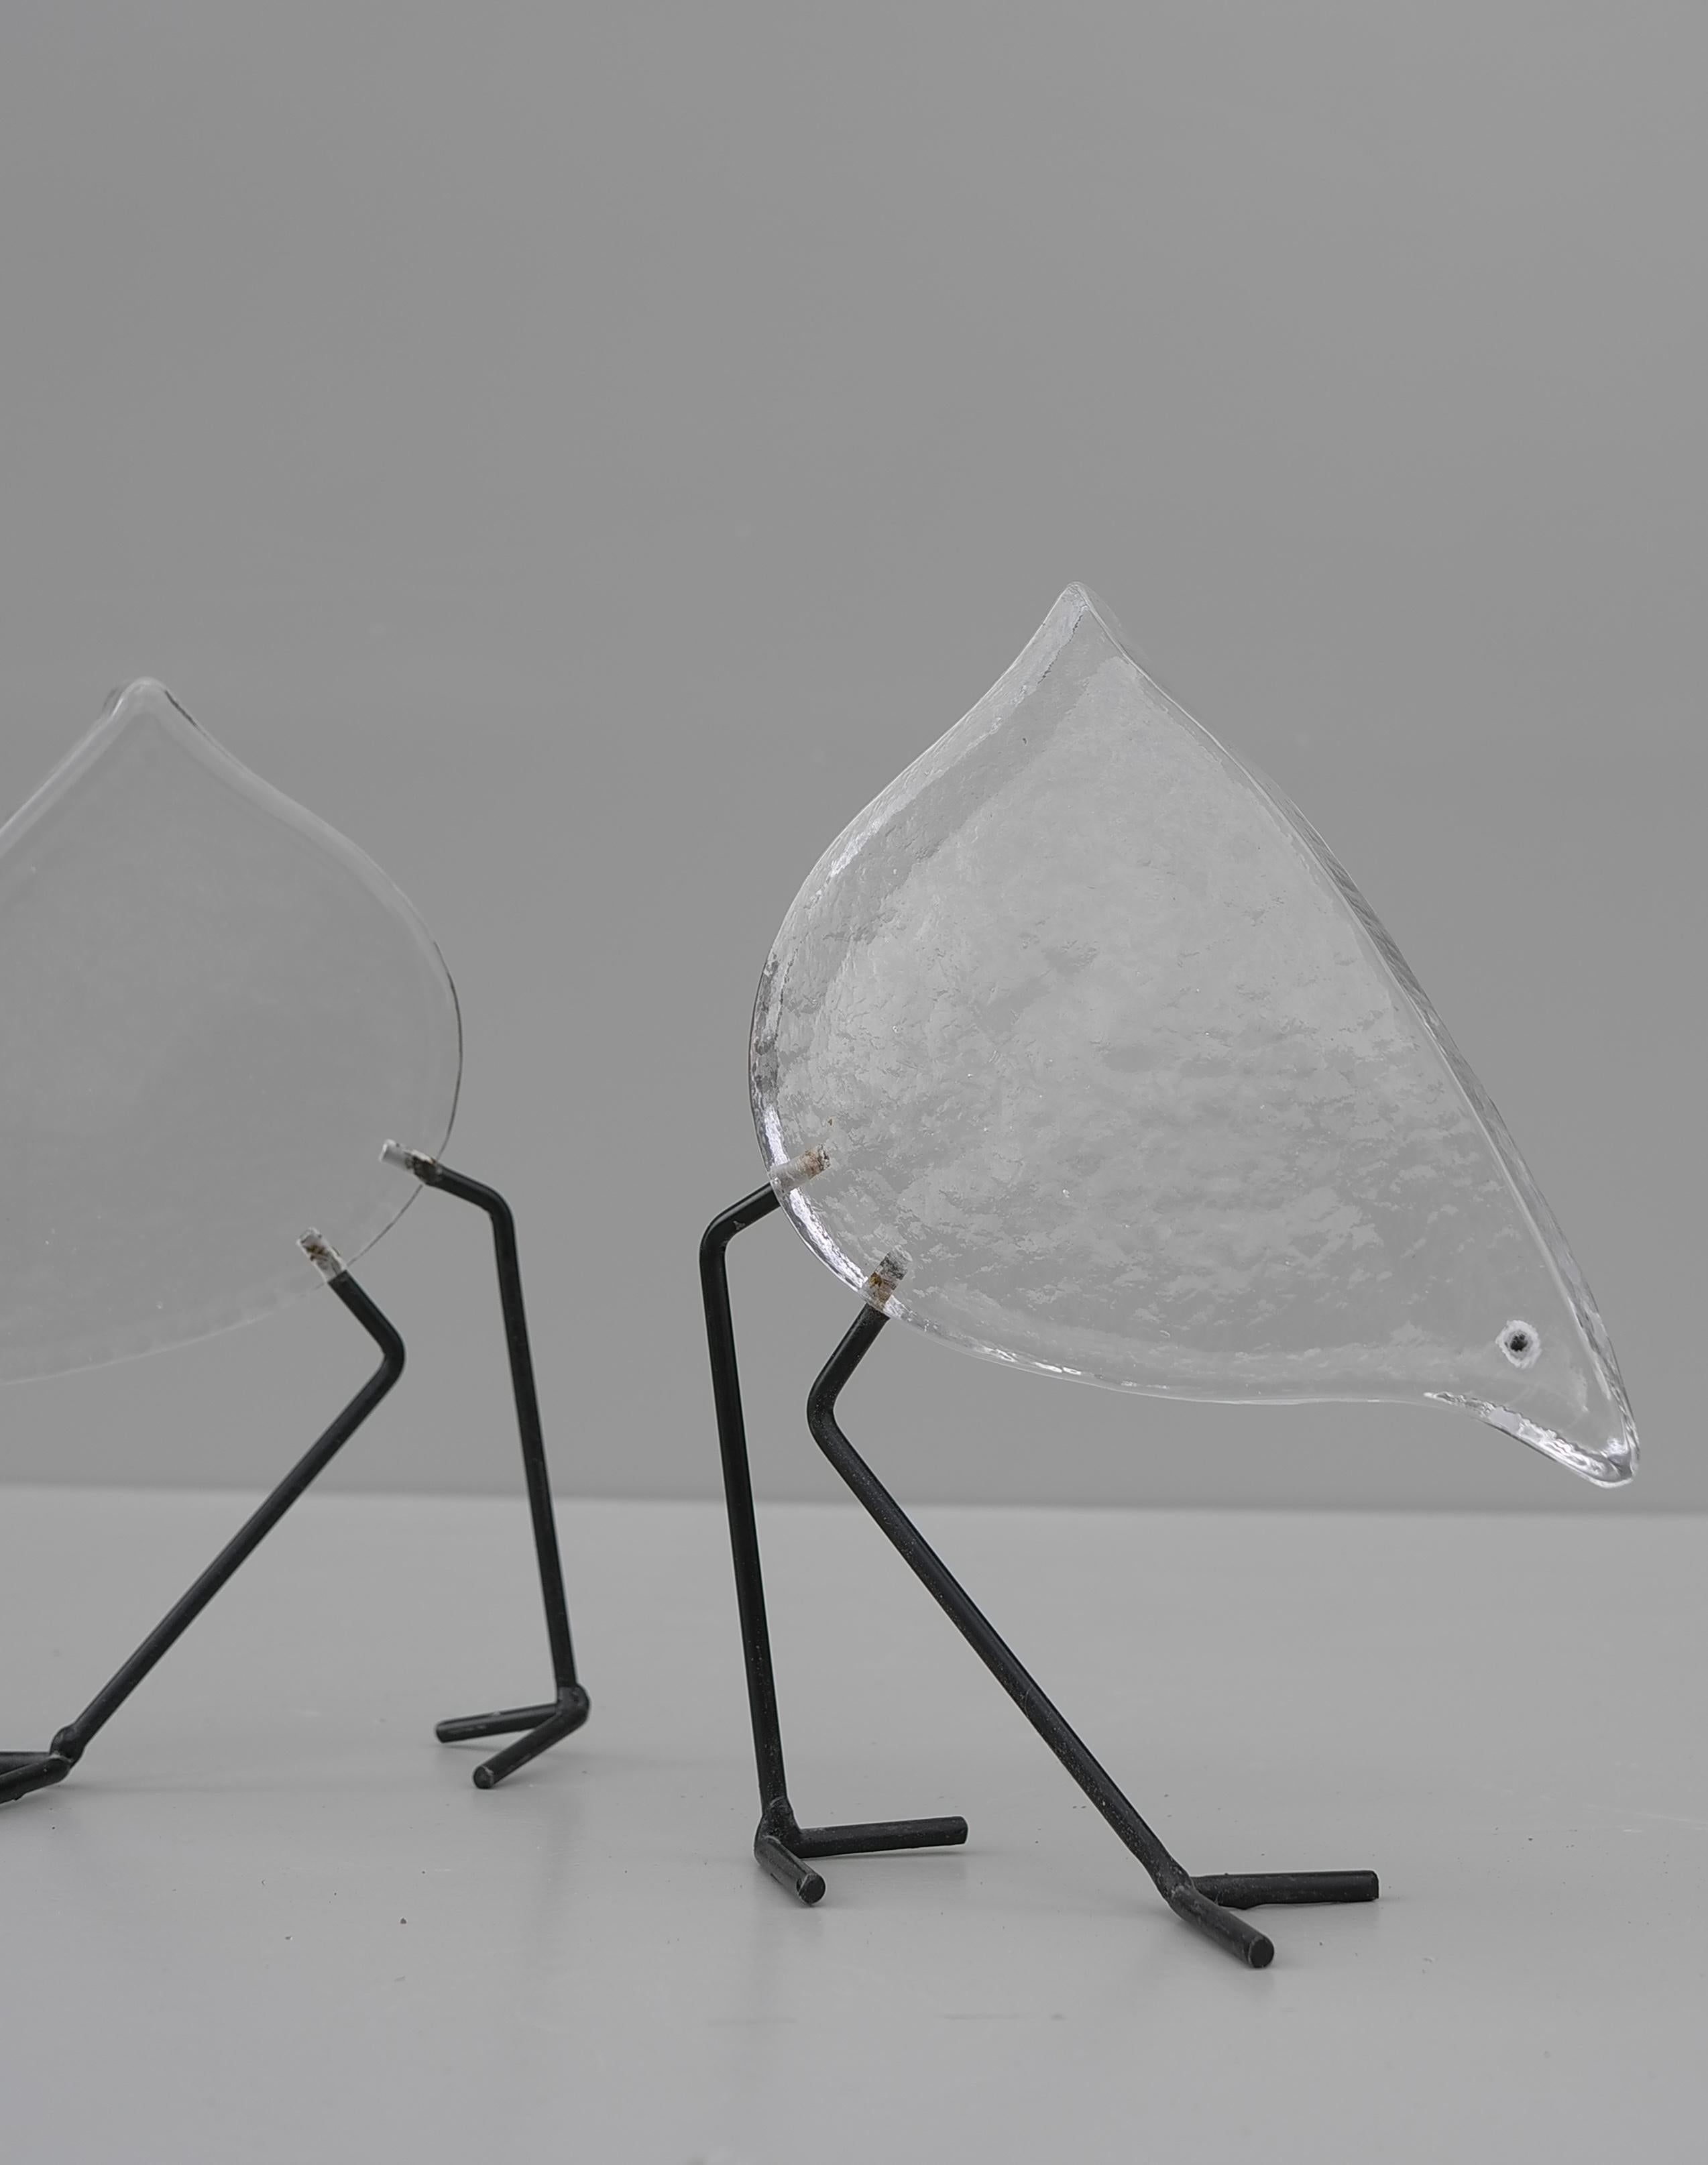 Mid-Century Modern, Glass Art Bird figurines 1960's For Sale 1